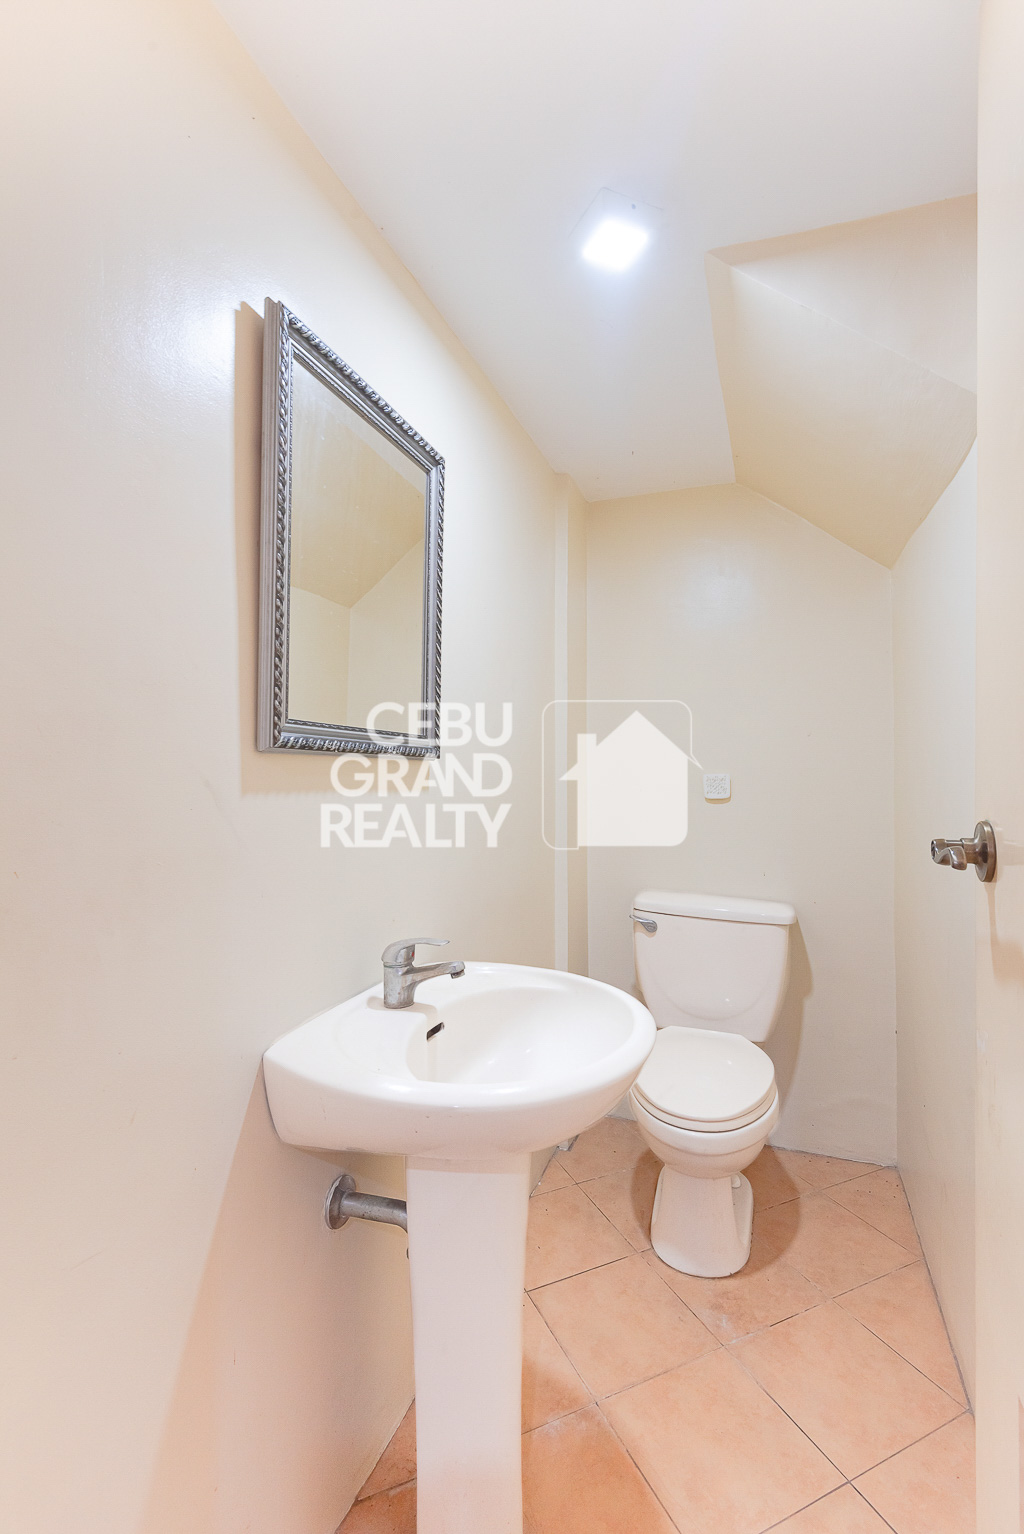 RHGP2 Semi-Furnished 3 Bedroom Townhouse for Rent in Banilad - Cebu Grand Realty (9)